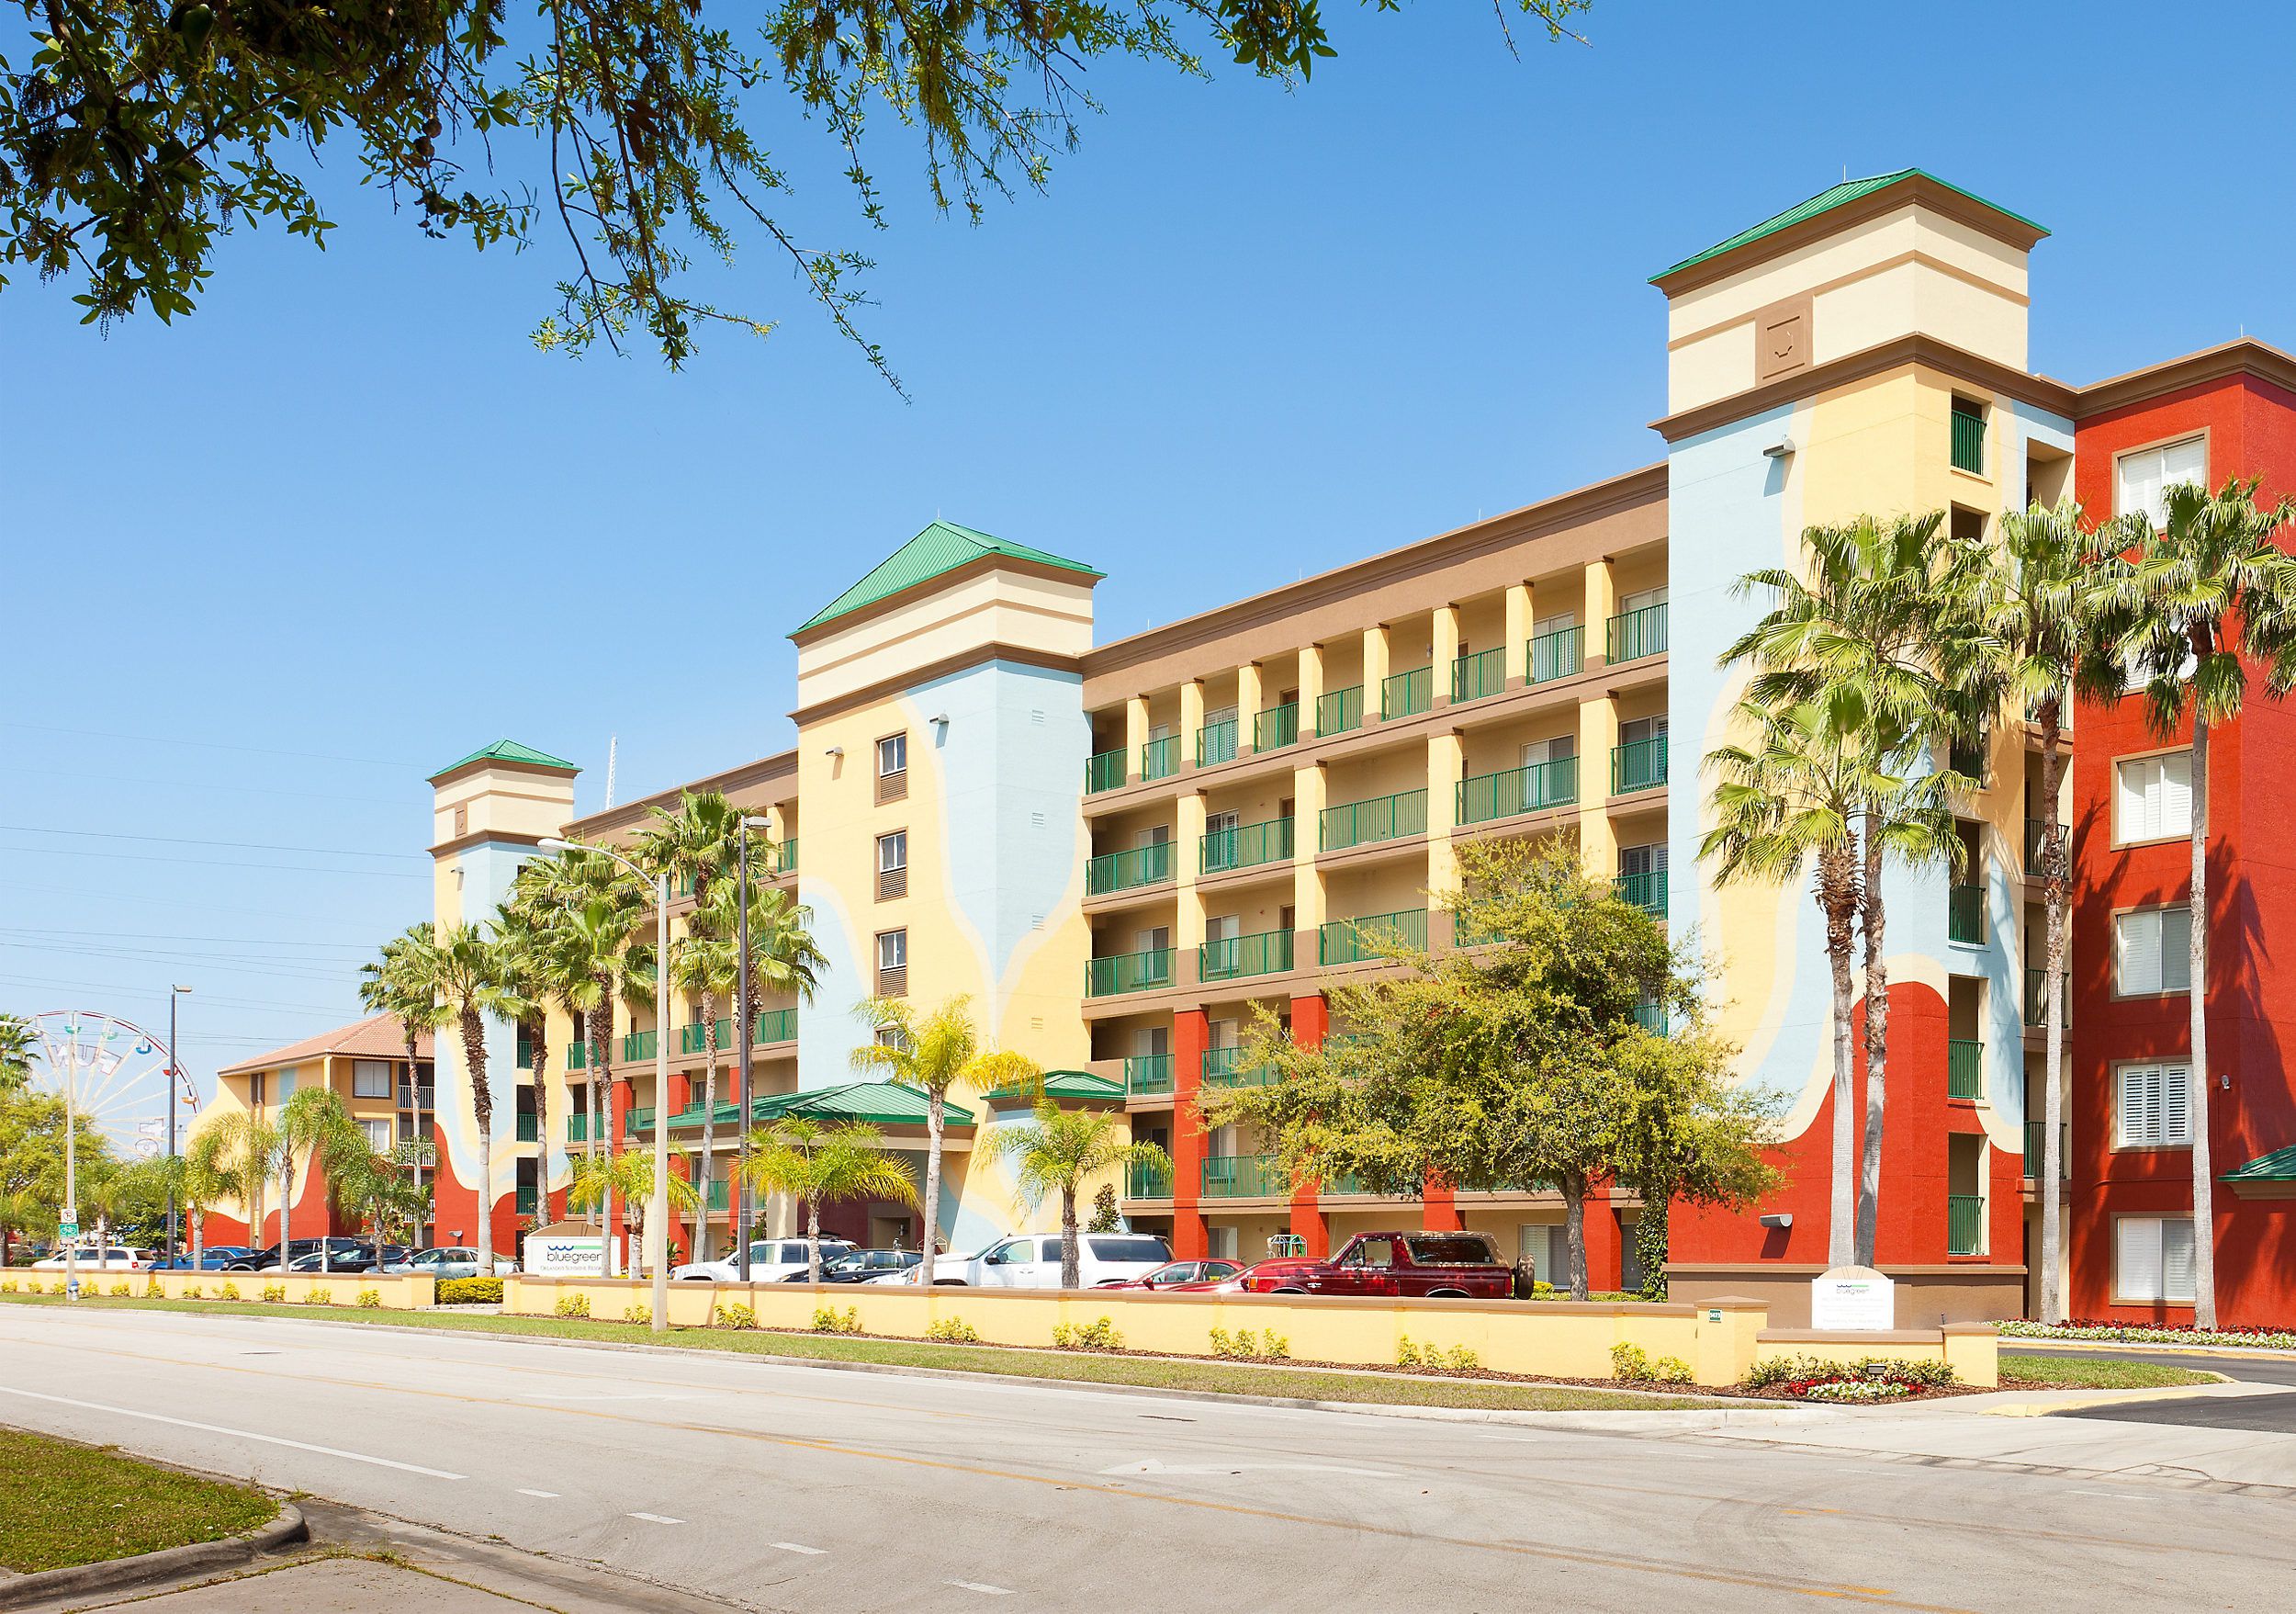 Bluegreen Vacations Orlando's Sunshine Resort